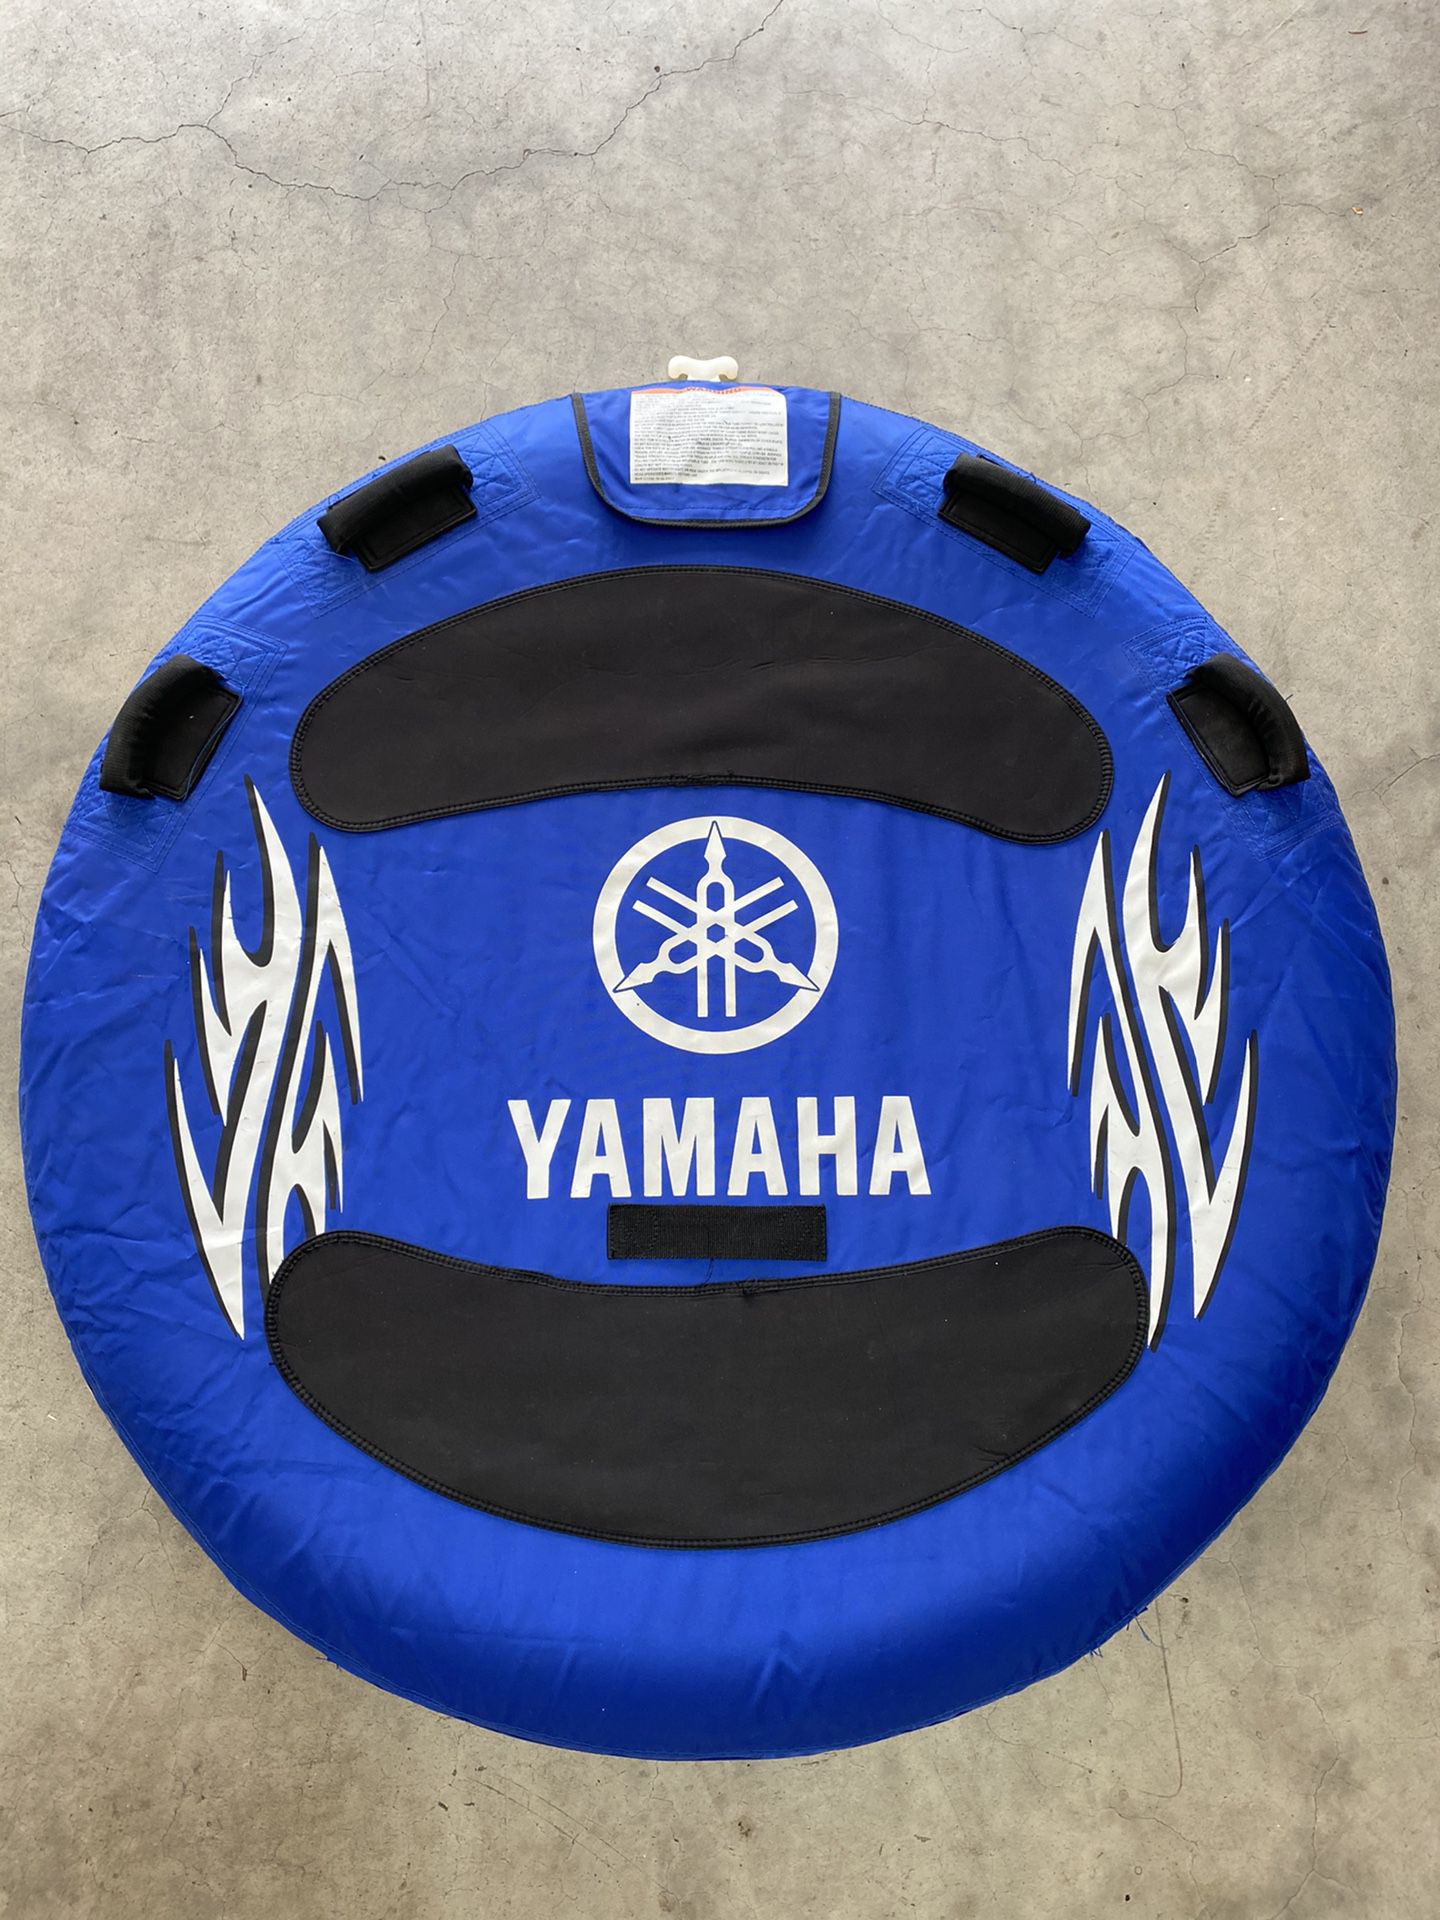 Yamaha performance towable $75